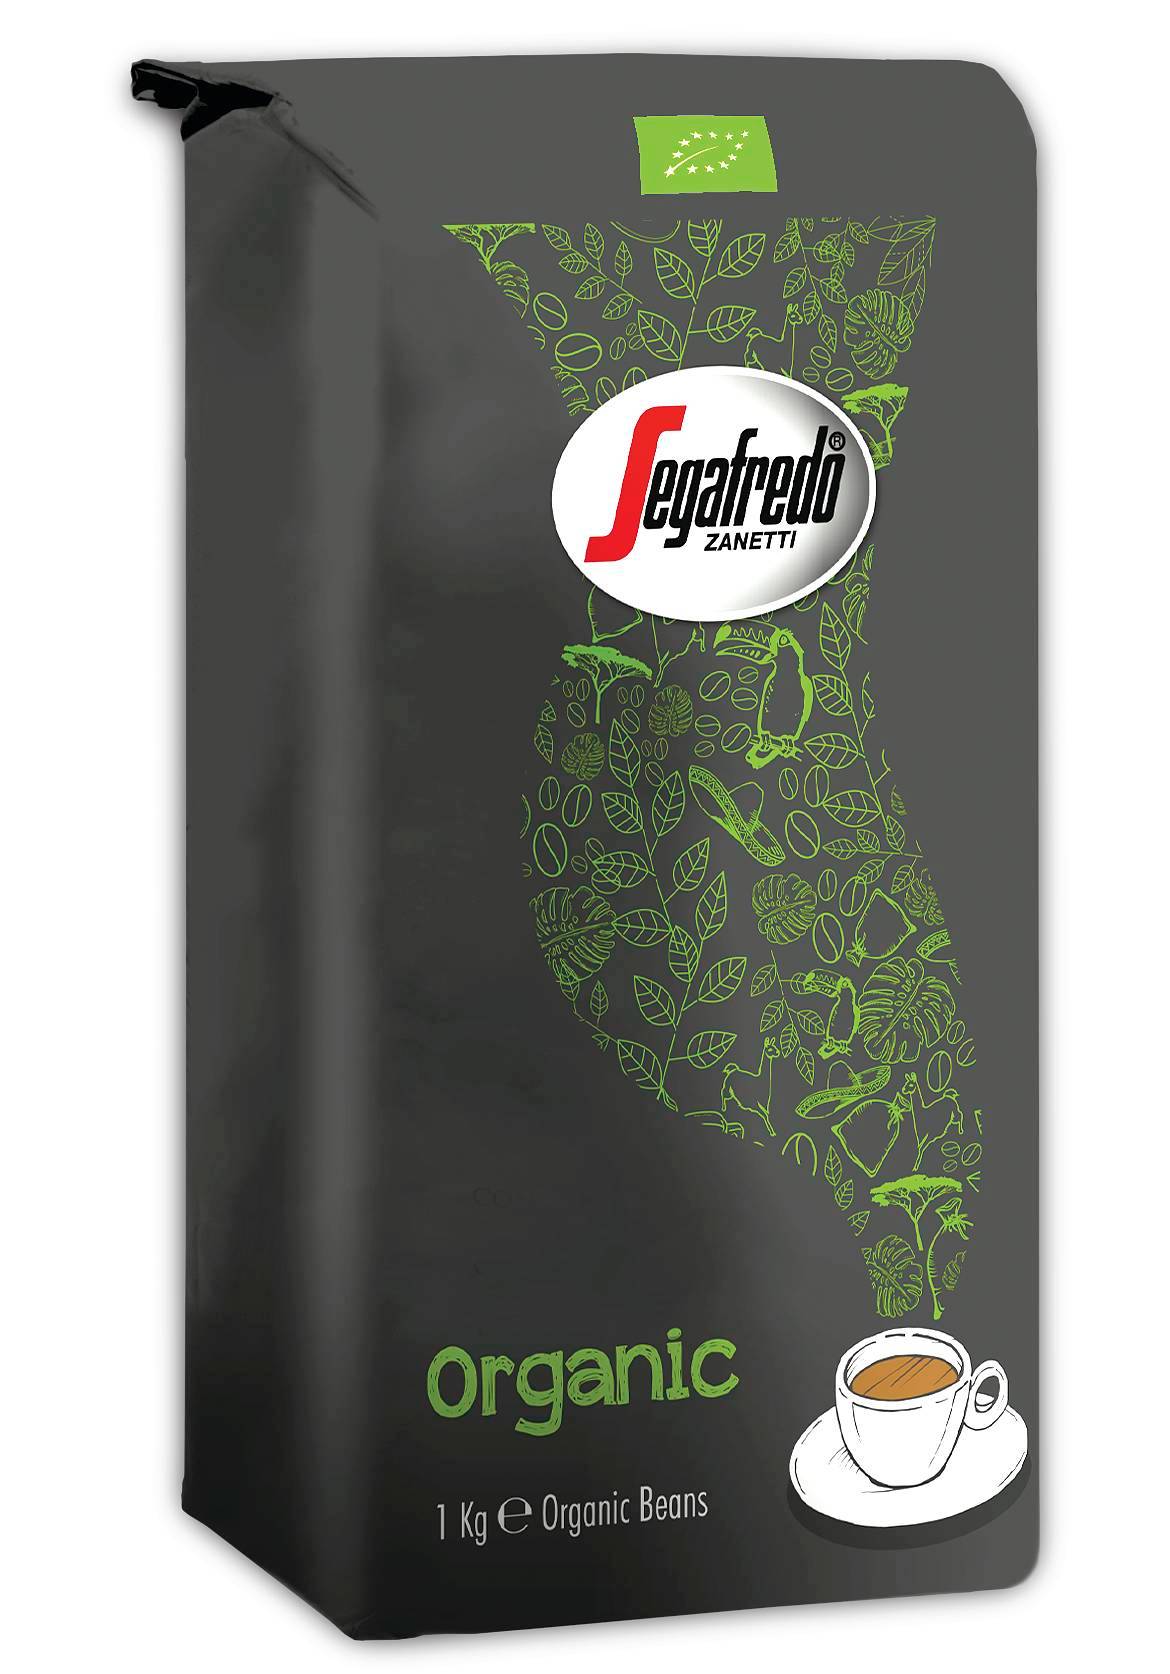 Organic, Fair Trade Coffee Beans - Élysée x Malongo (220g)